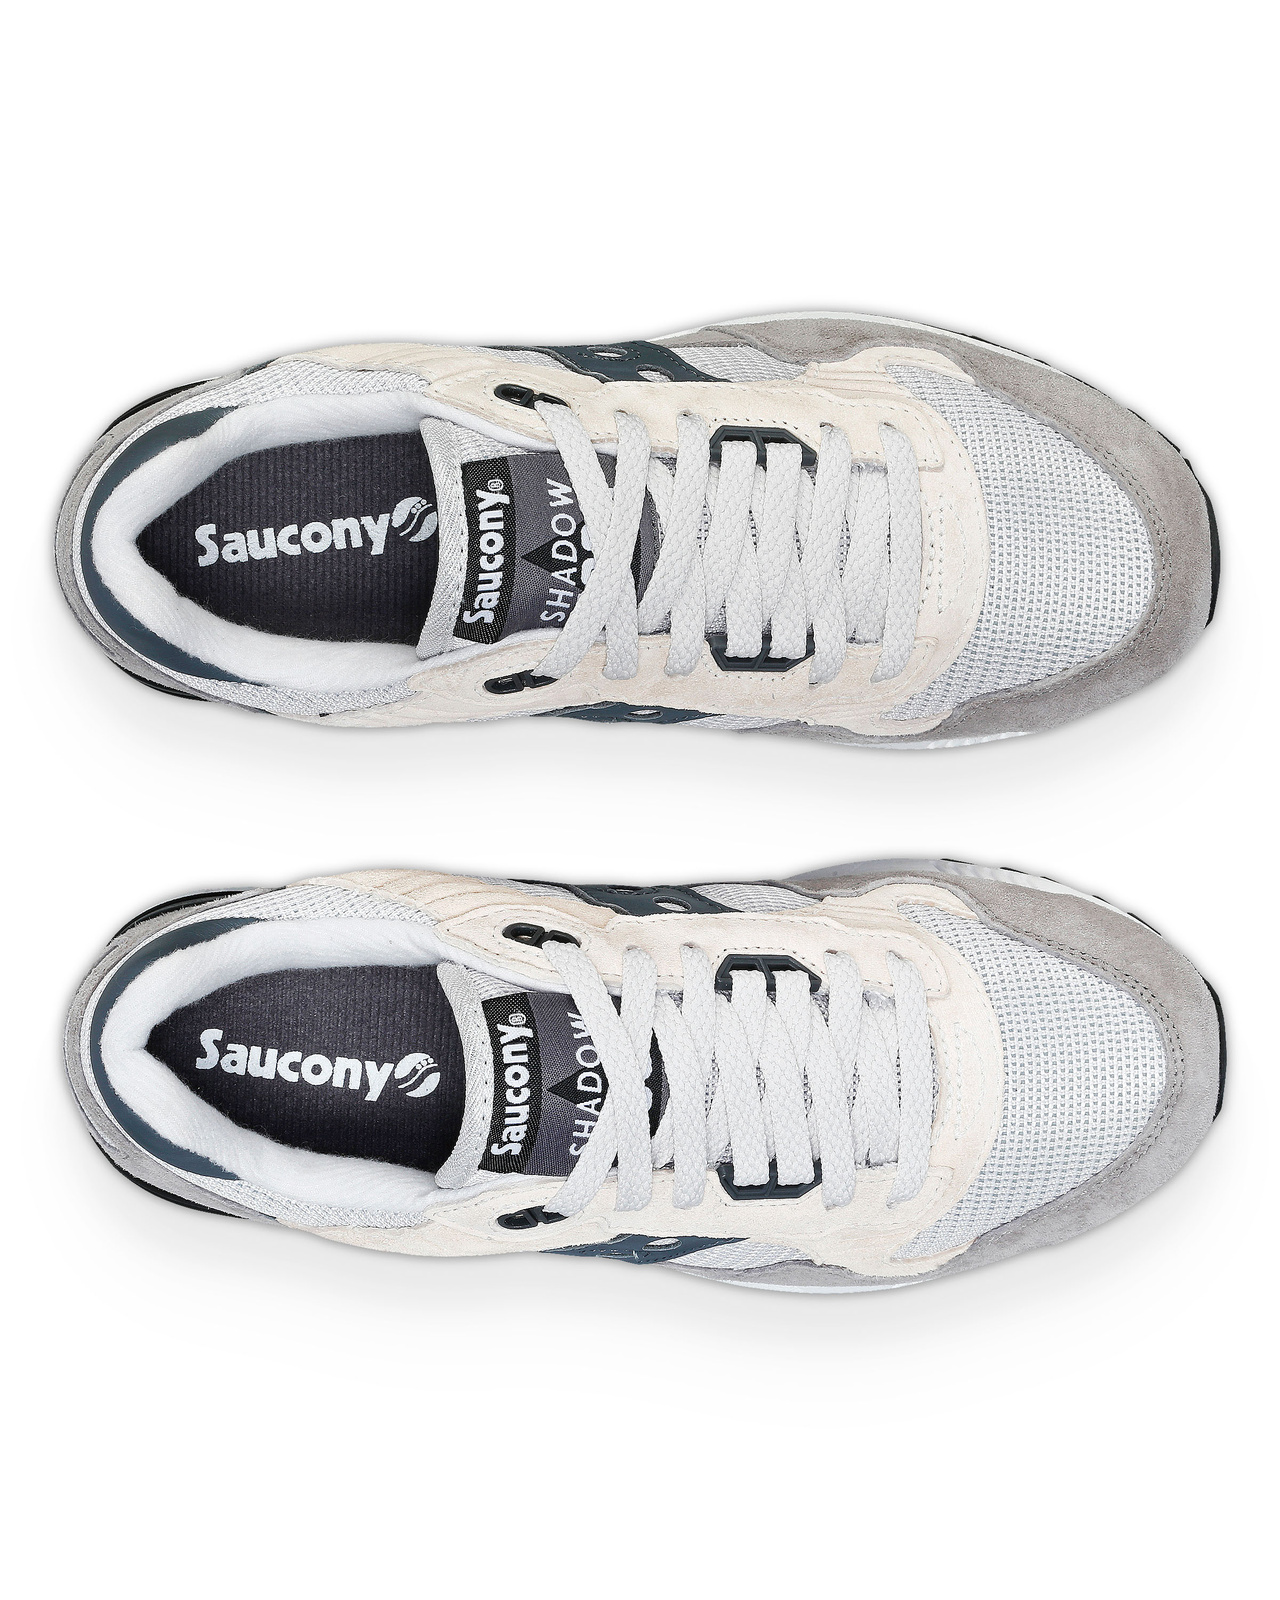 Sneaker Shadow 5000 - Grey/Dark grey - 45